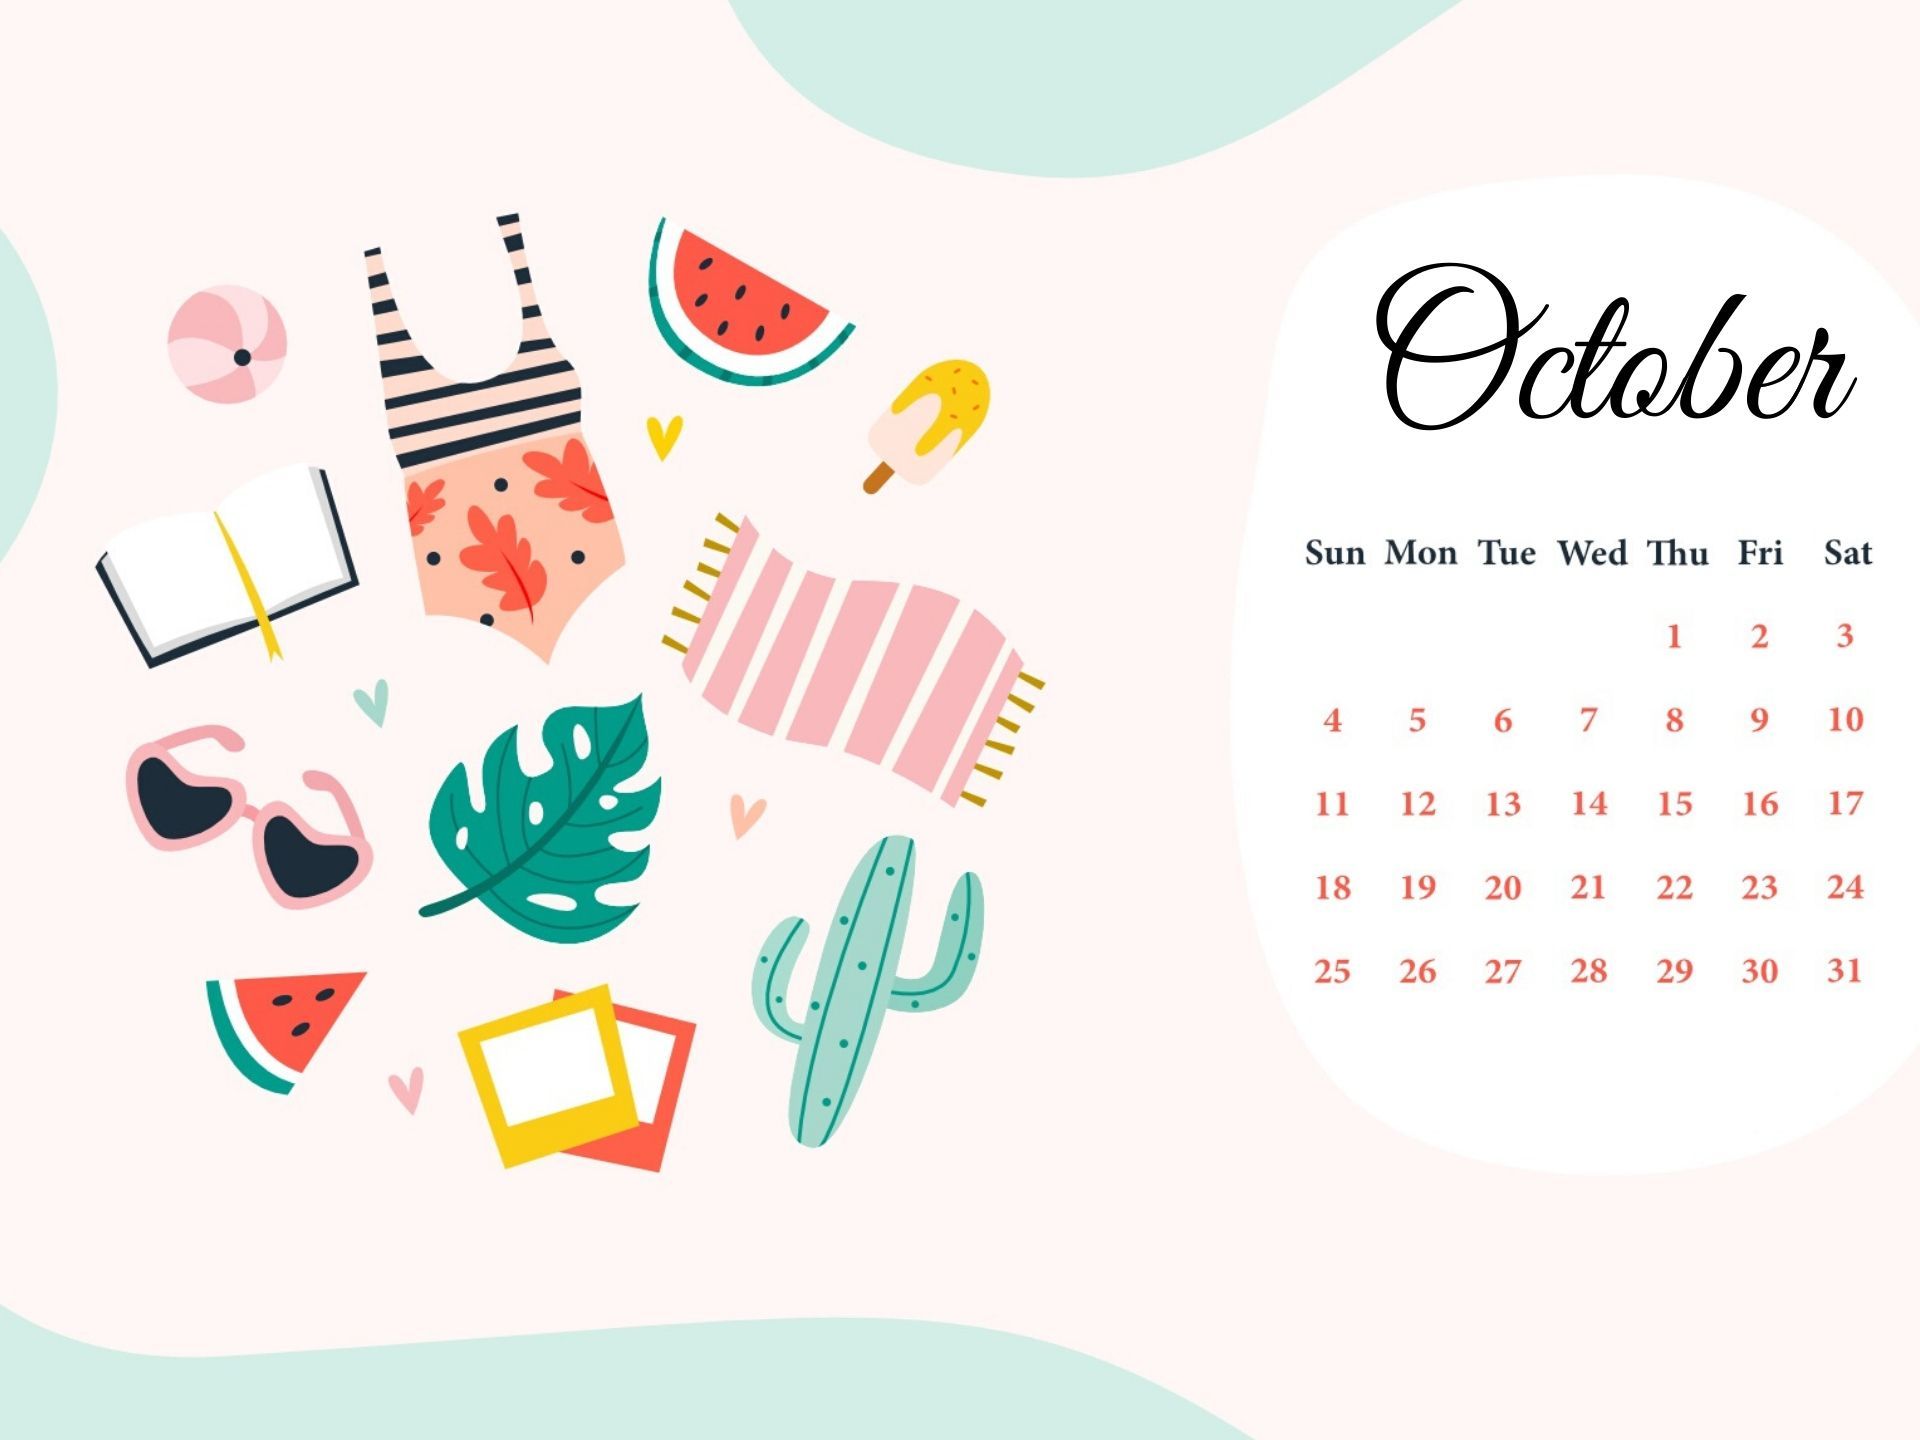 October 2020 Calendar HD Wallpapers Free Download